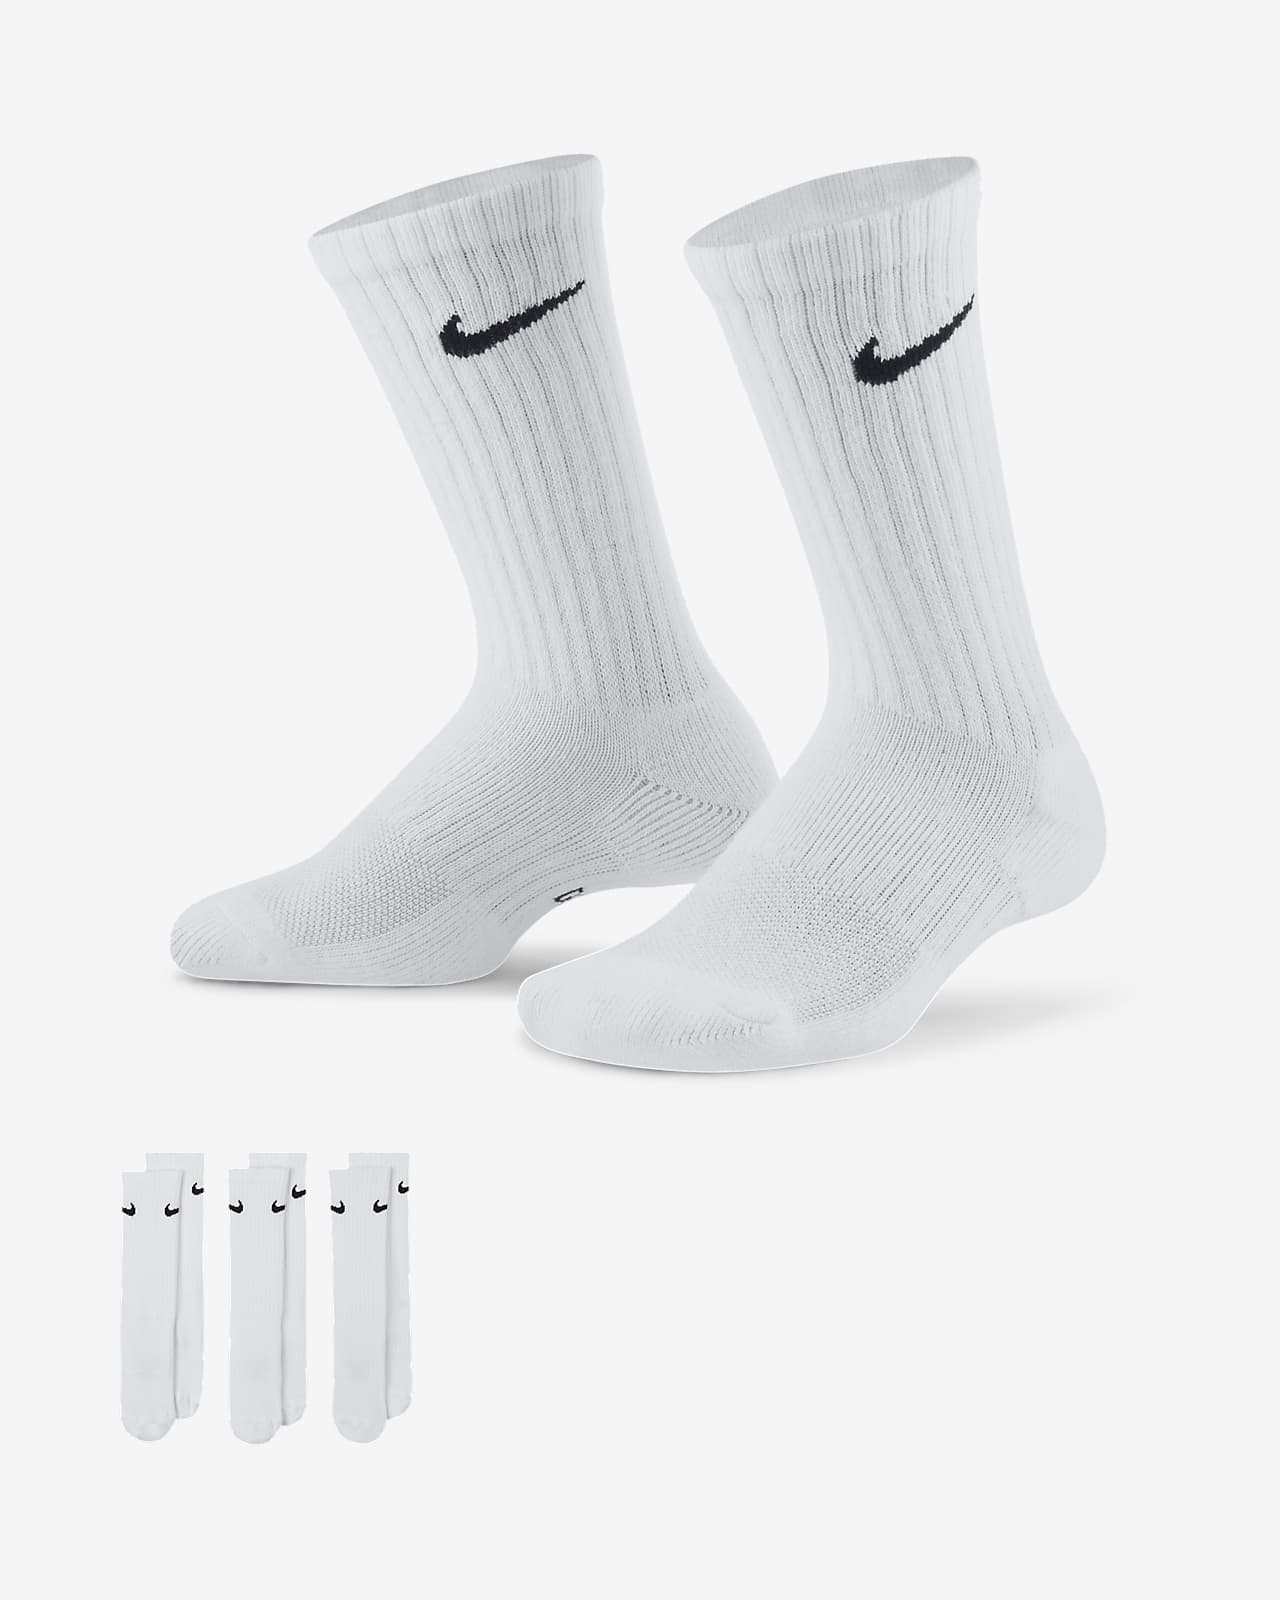 Nike Everyday Kids' Cushioned Crew Socks (3 Pairs)